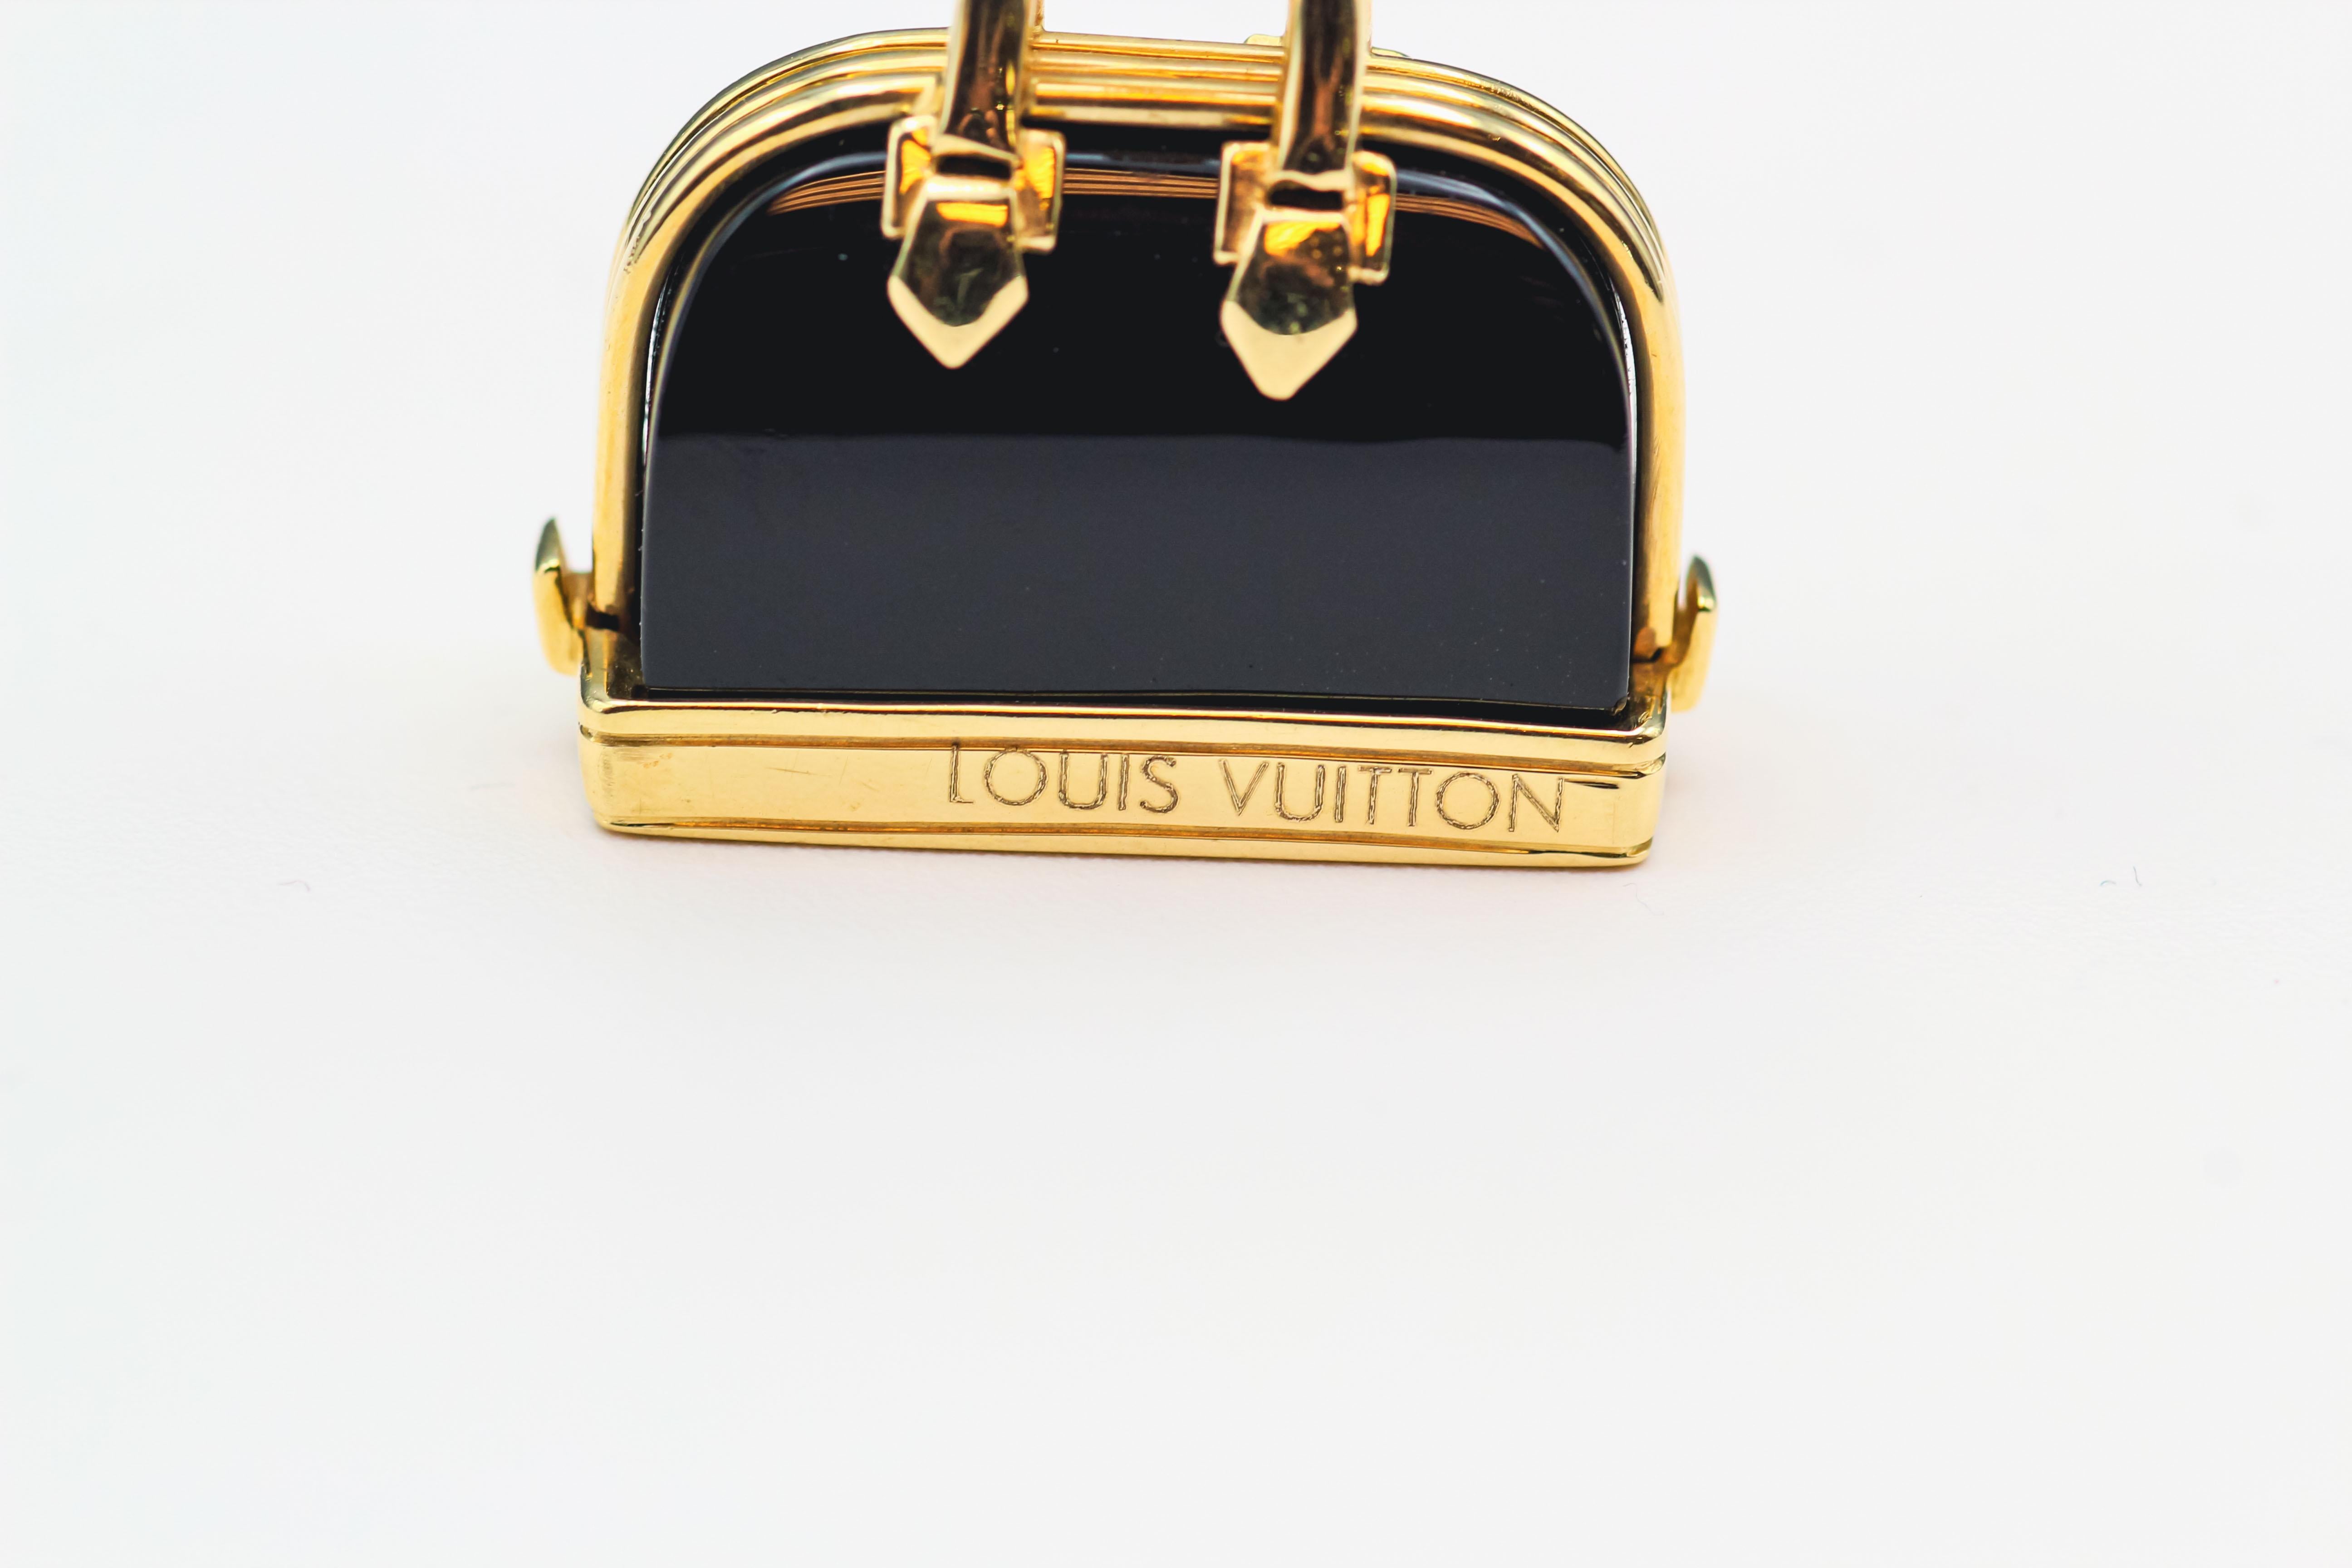 Oval Cut Louis Vuitton Onyx 18k Yellow Gold Alma Bag Charm Pendant For Sale